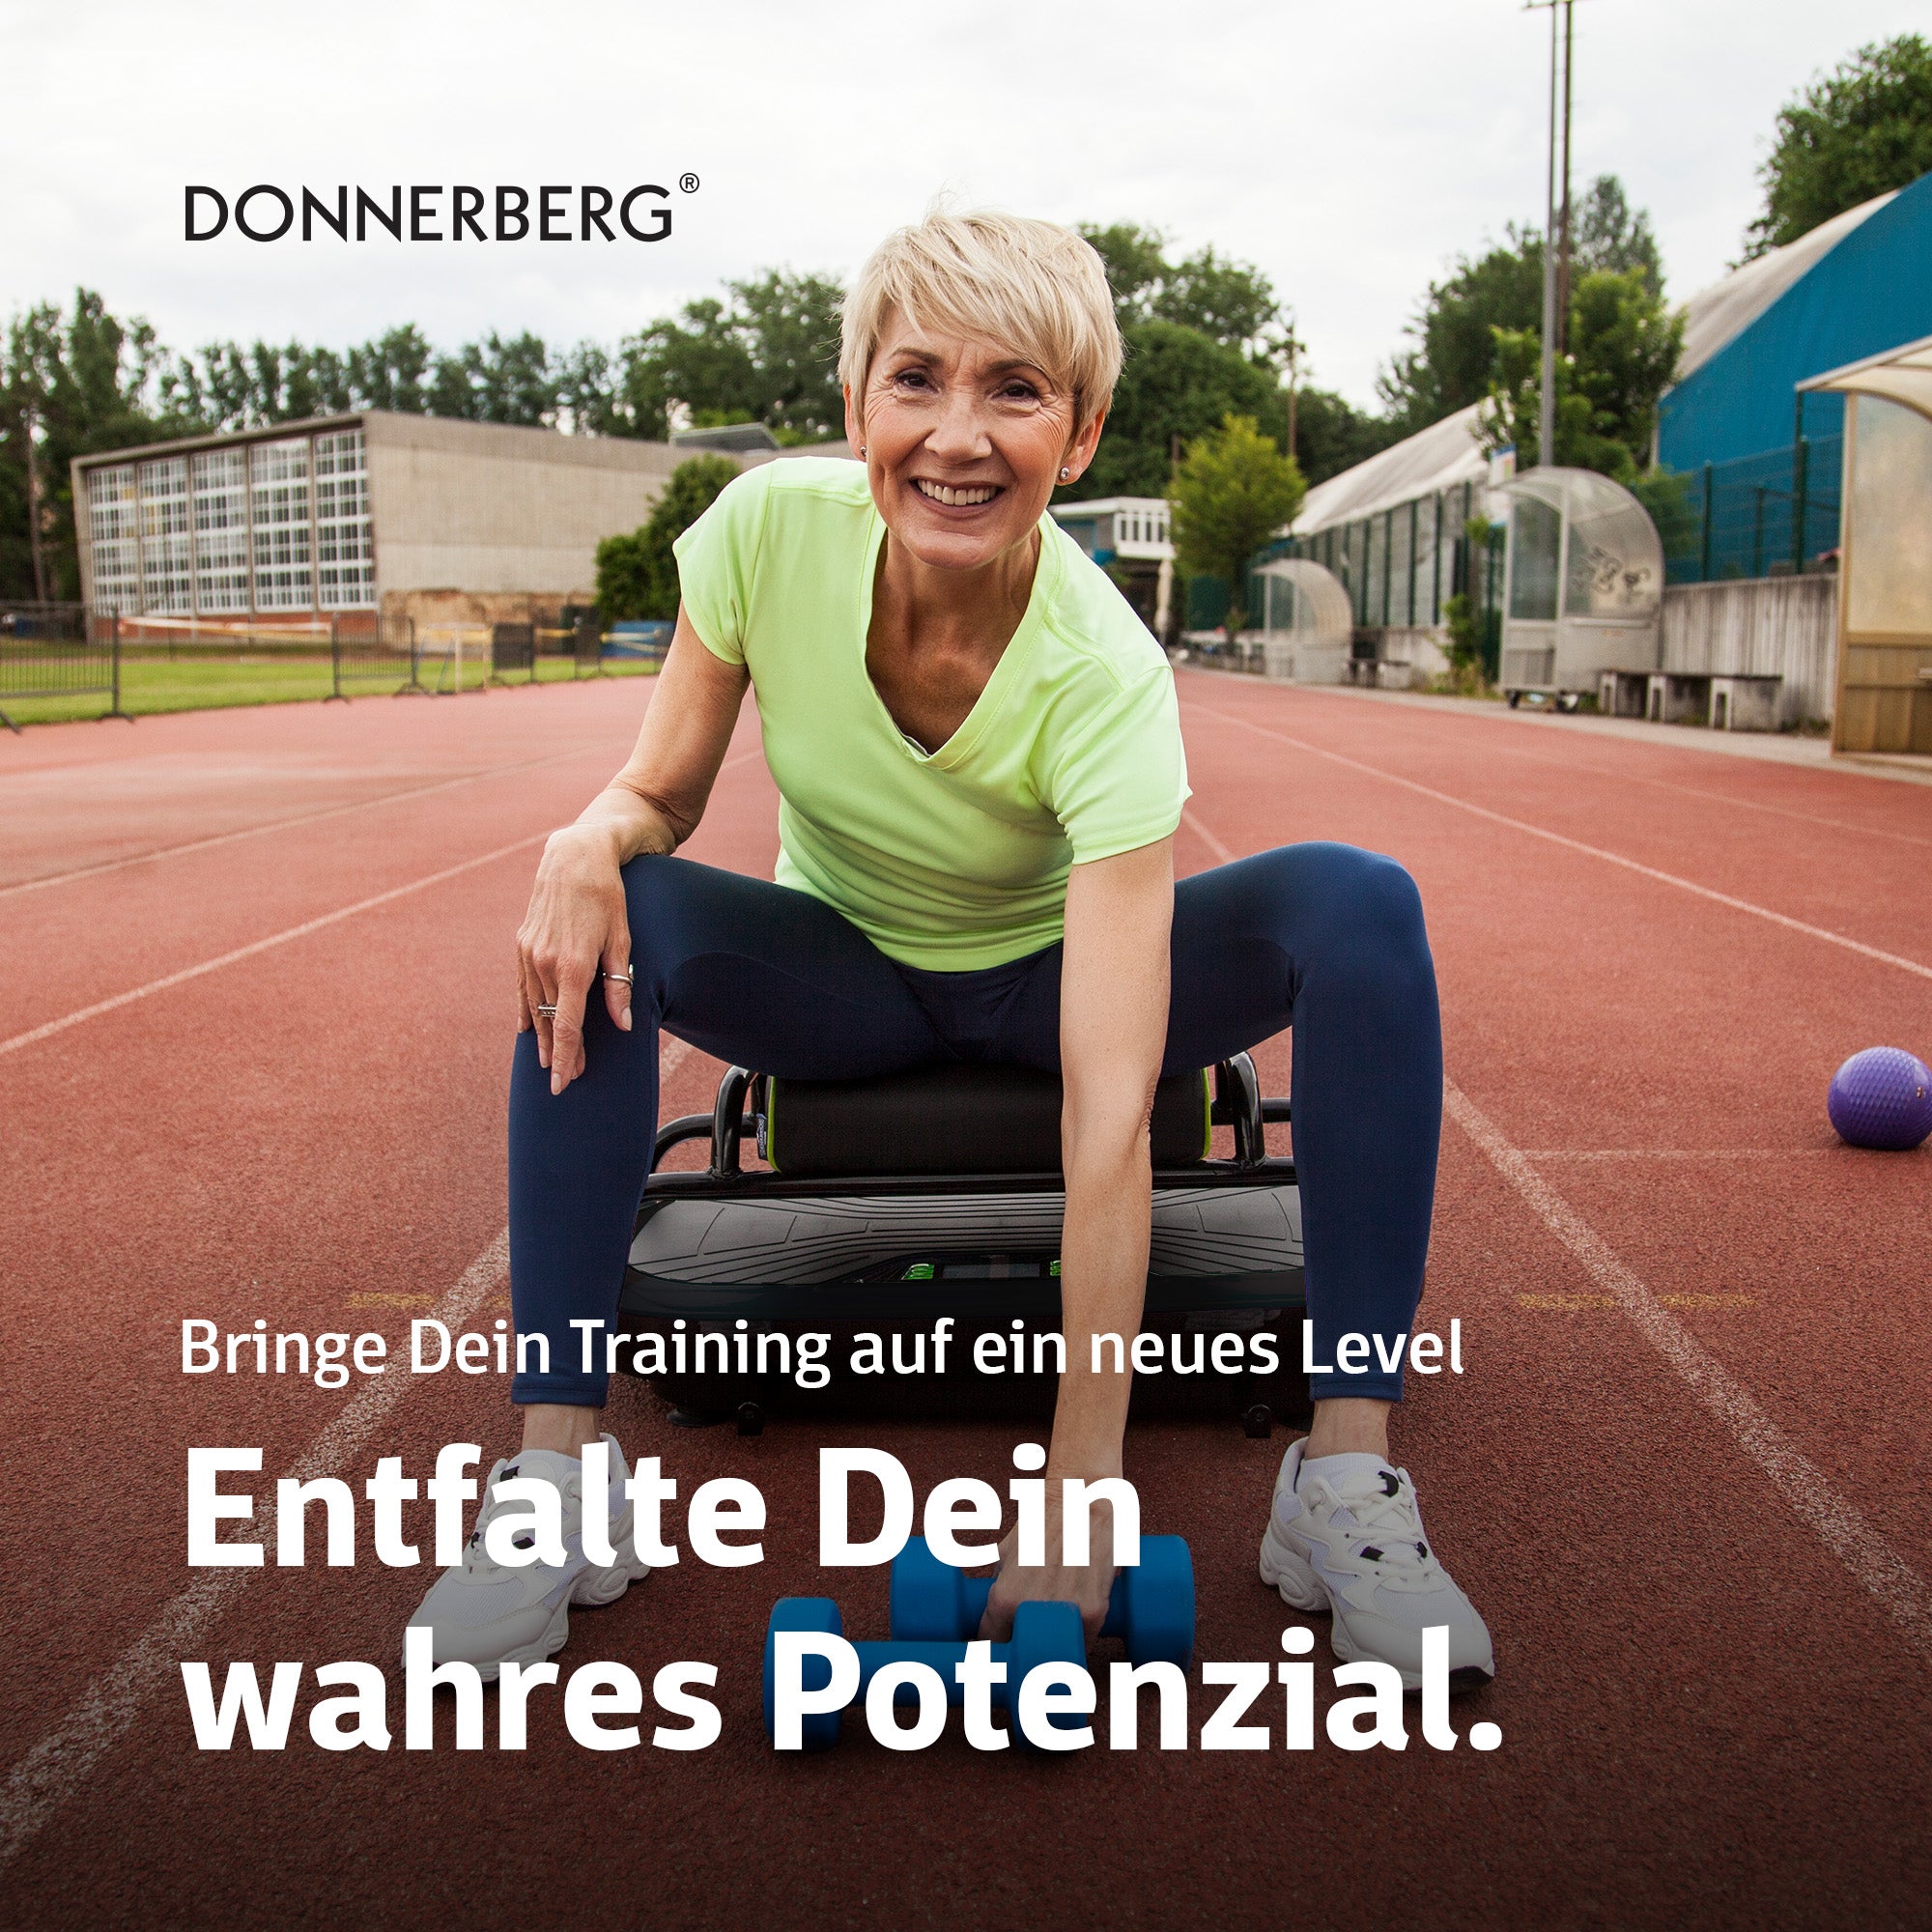 Woman doing exercises on Donnerberg vibration platform